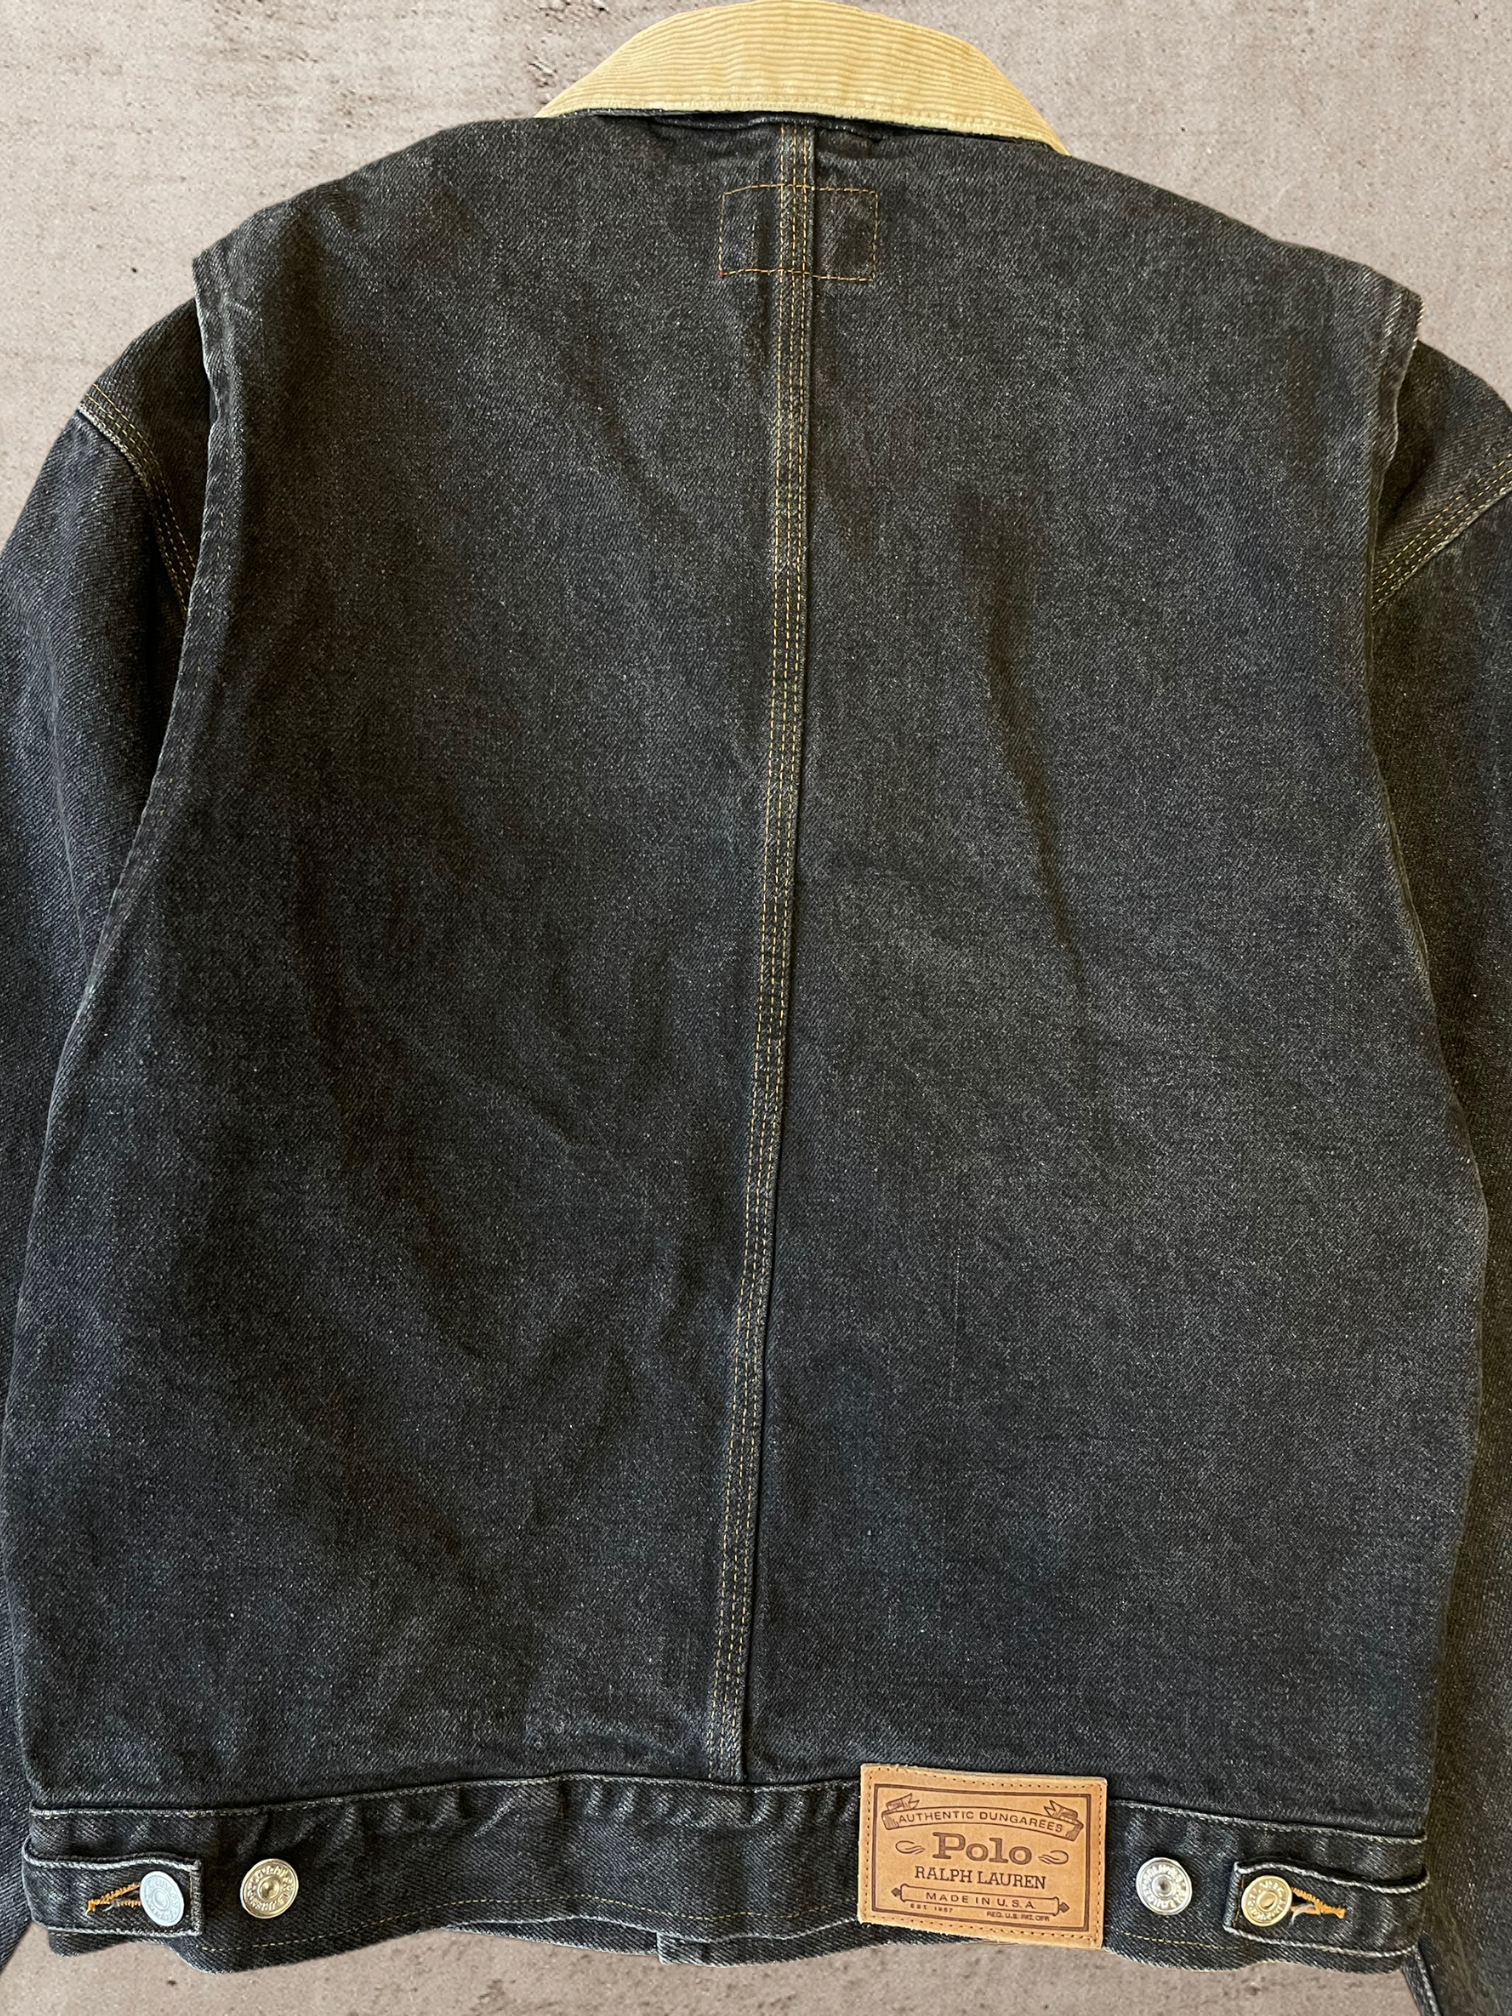 90s Polo Ralph Lauren Dungarees Denim Jacket - Medium